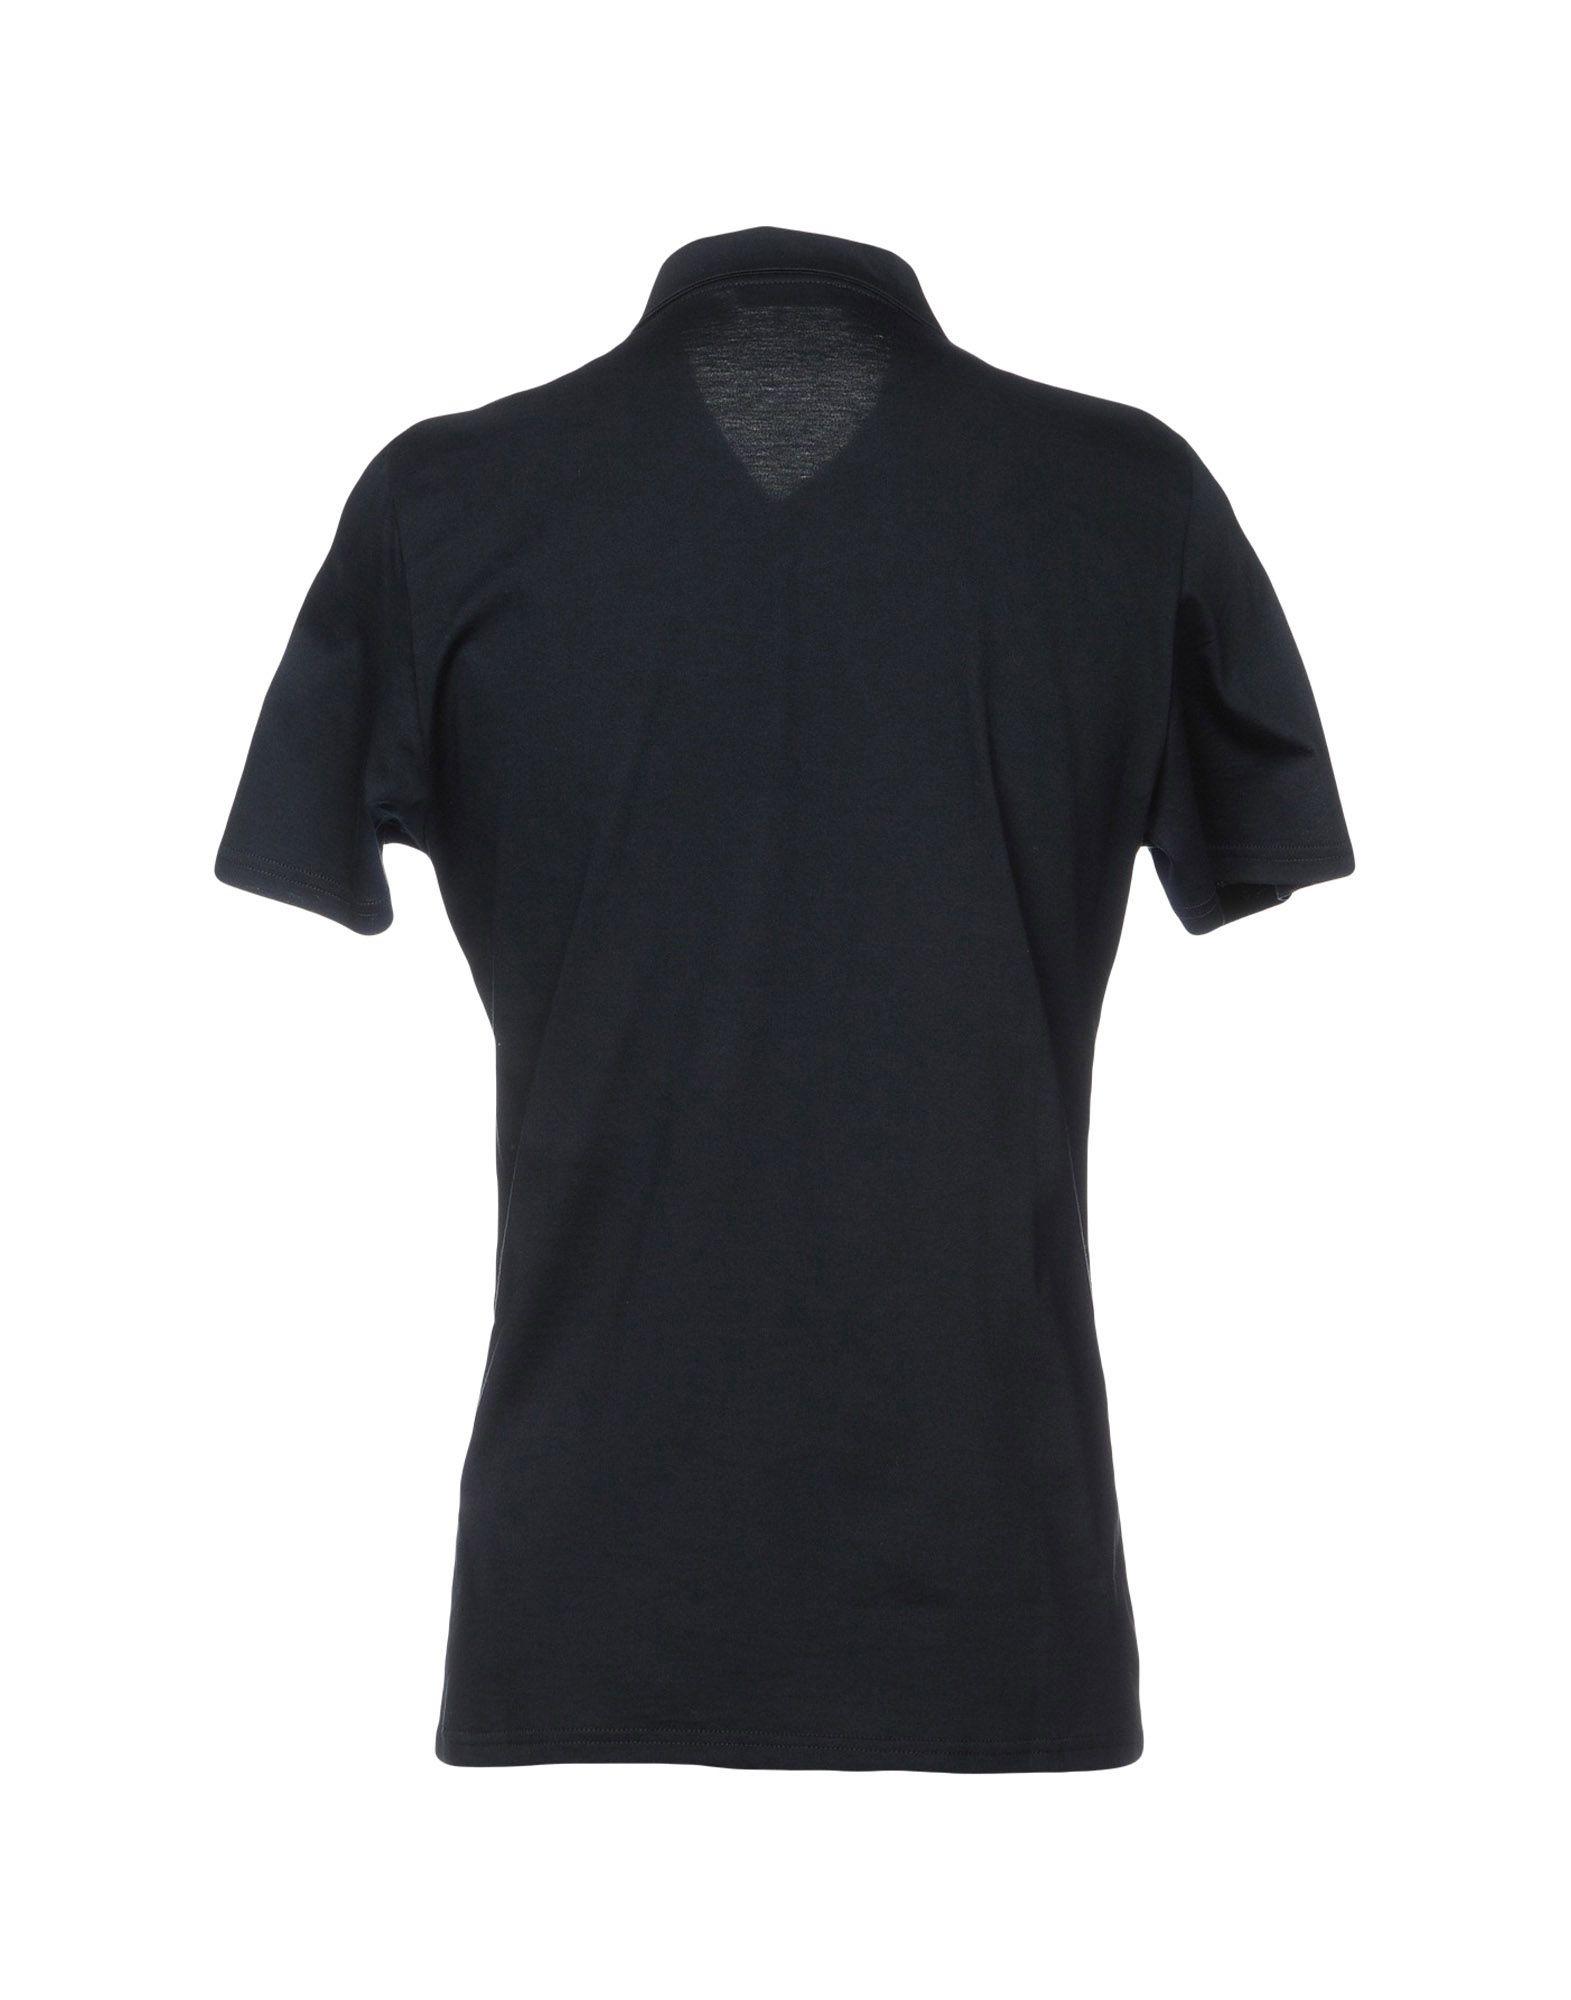 Roberto Cavalli Cotton Polo Shirt in Dark Blue (Blue) for Men - Lyst